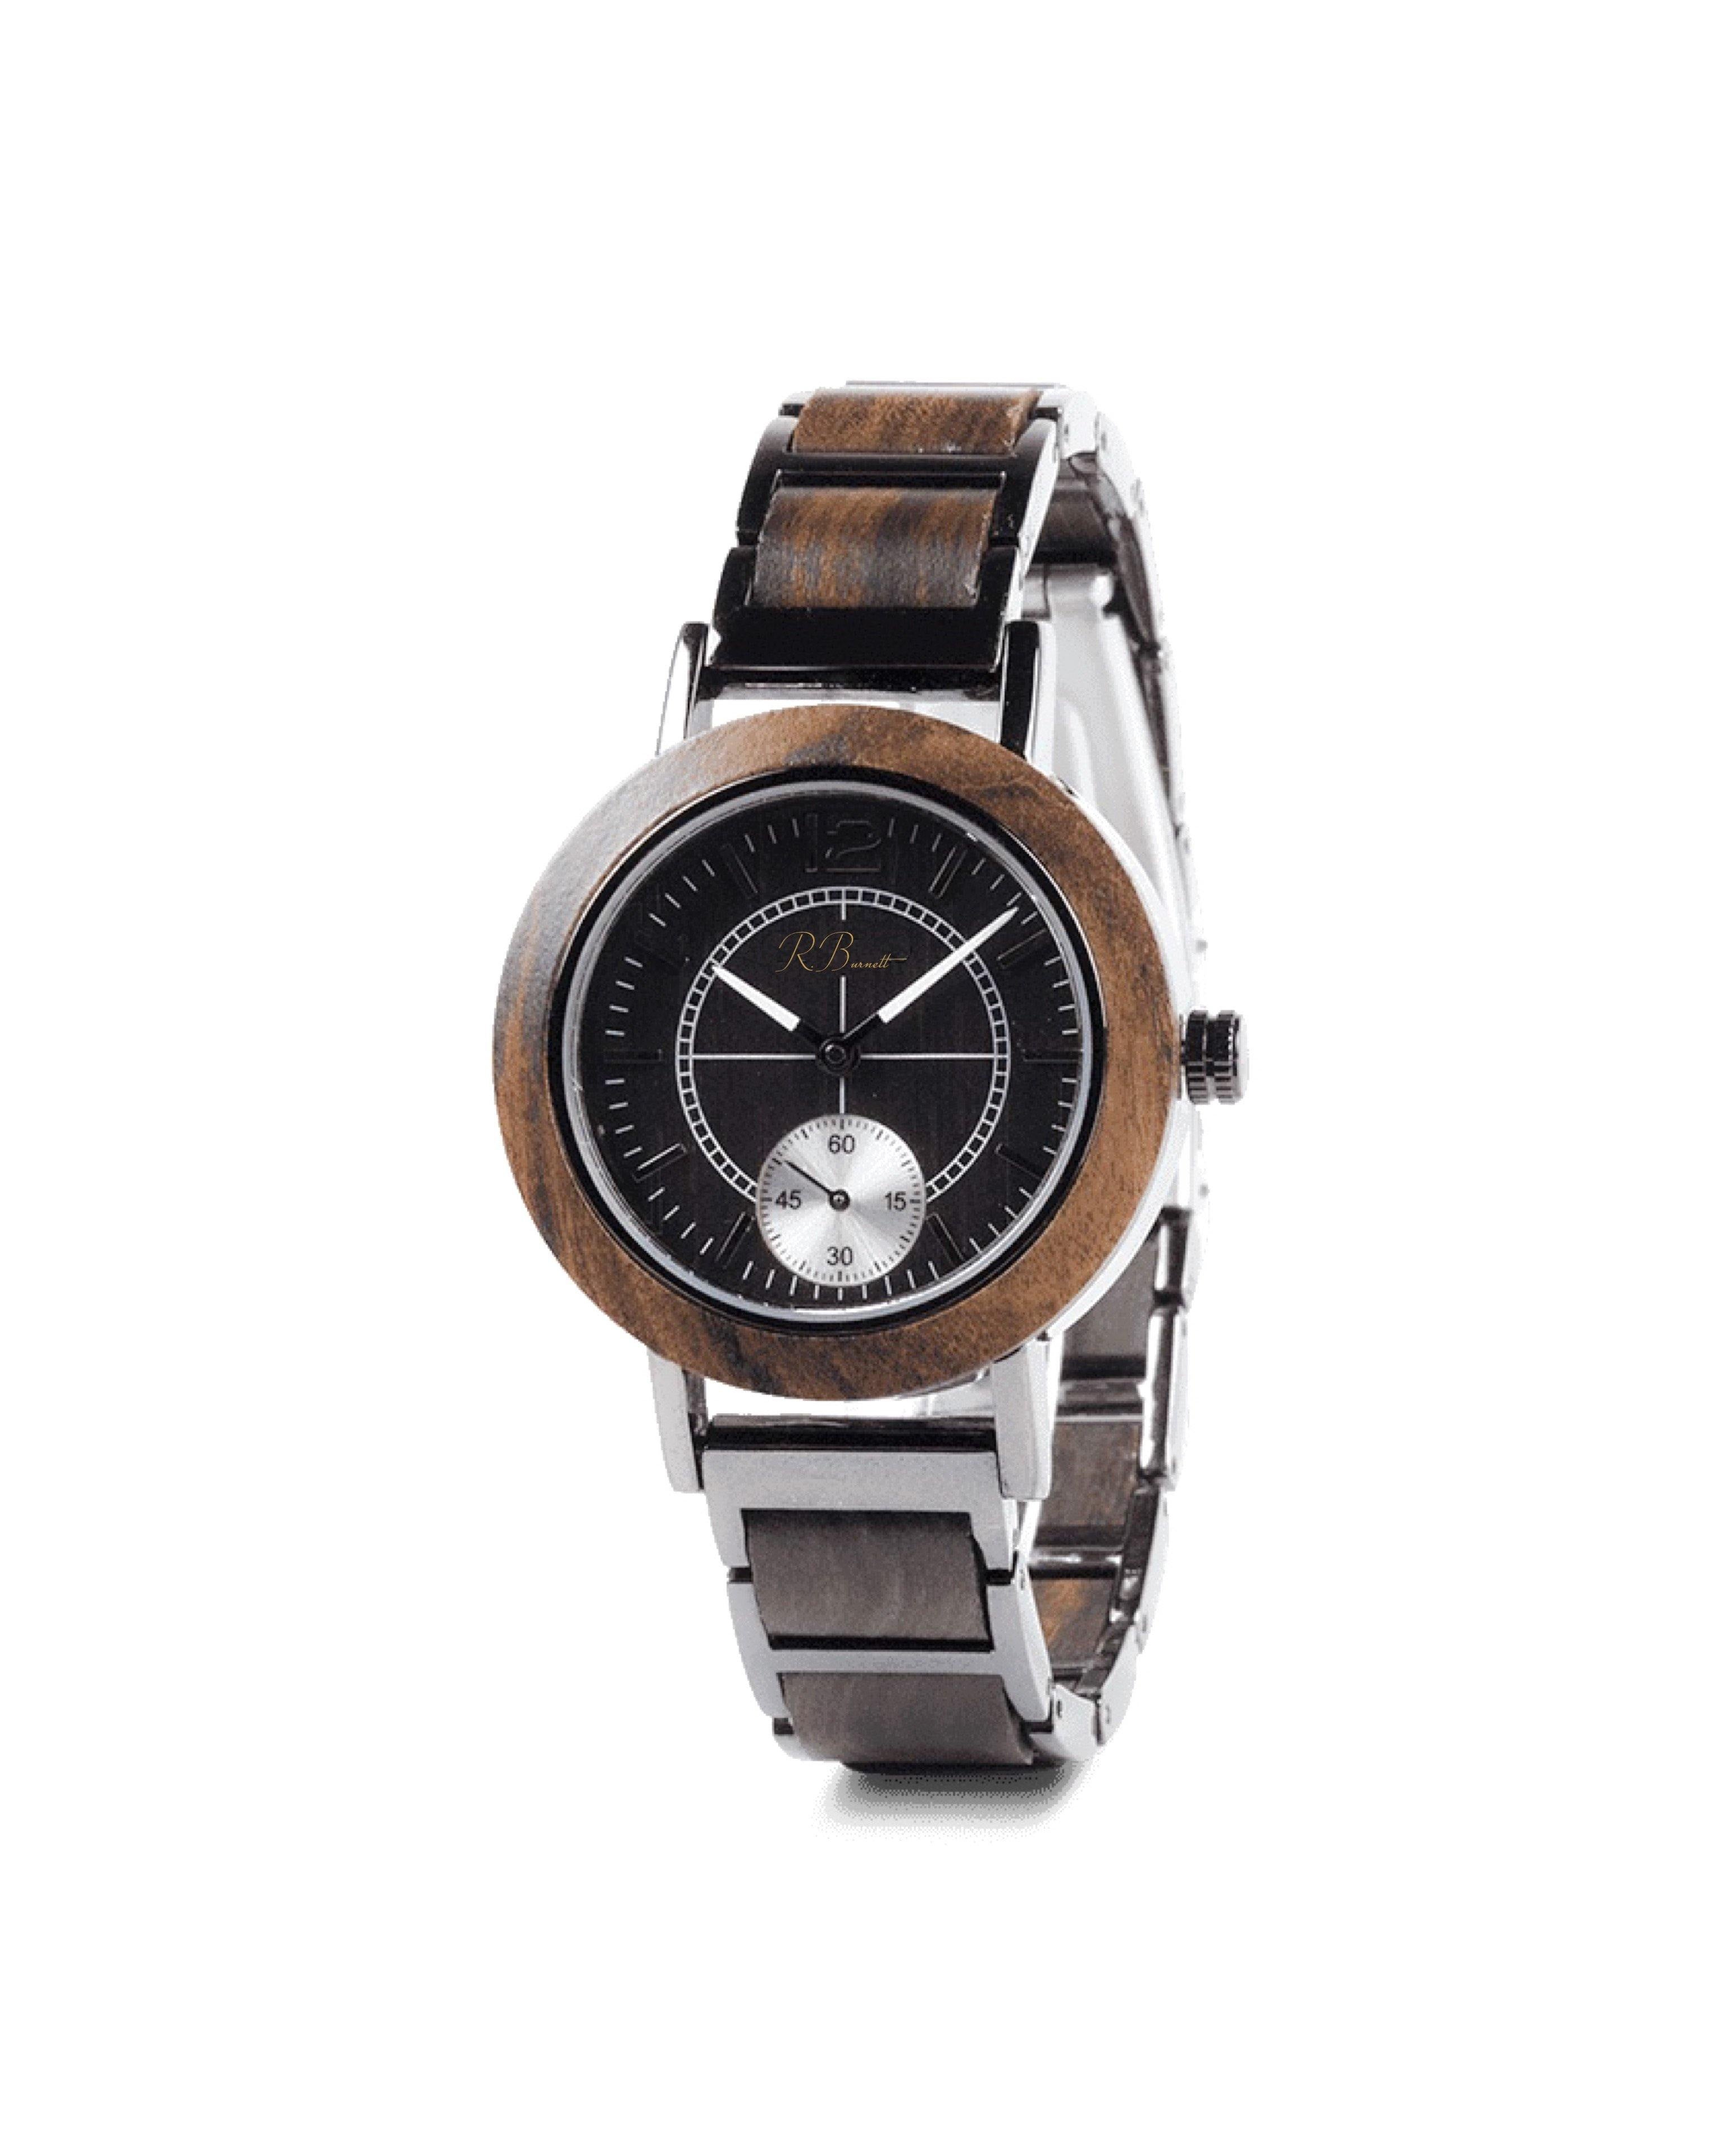 Metallo - Wooden Watch